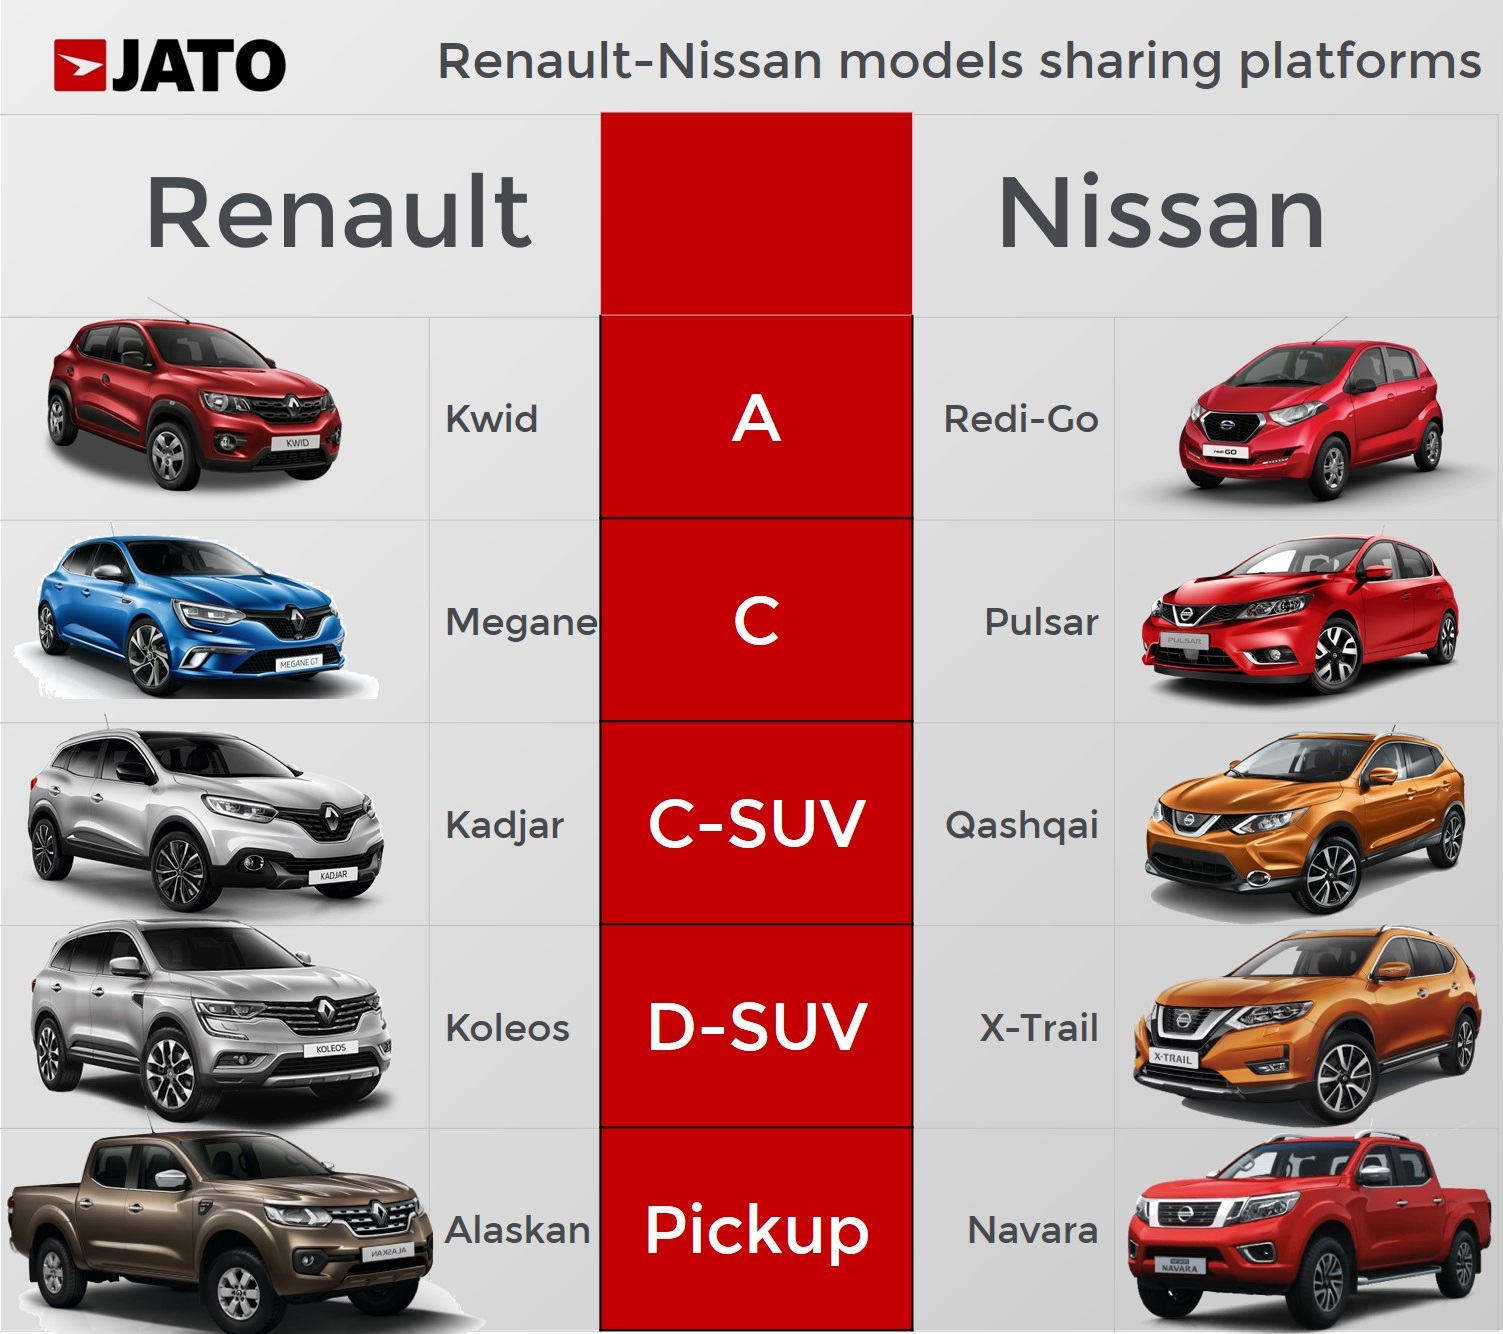 Renault-Nissan_Mitsubishi Alliance